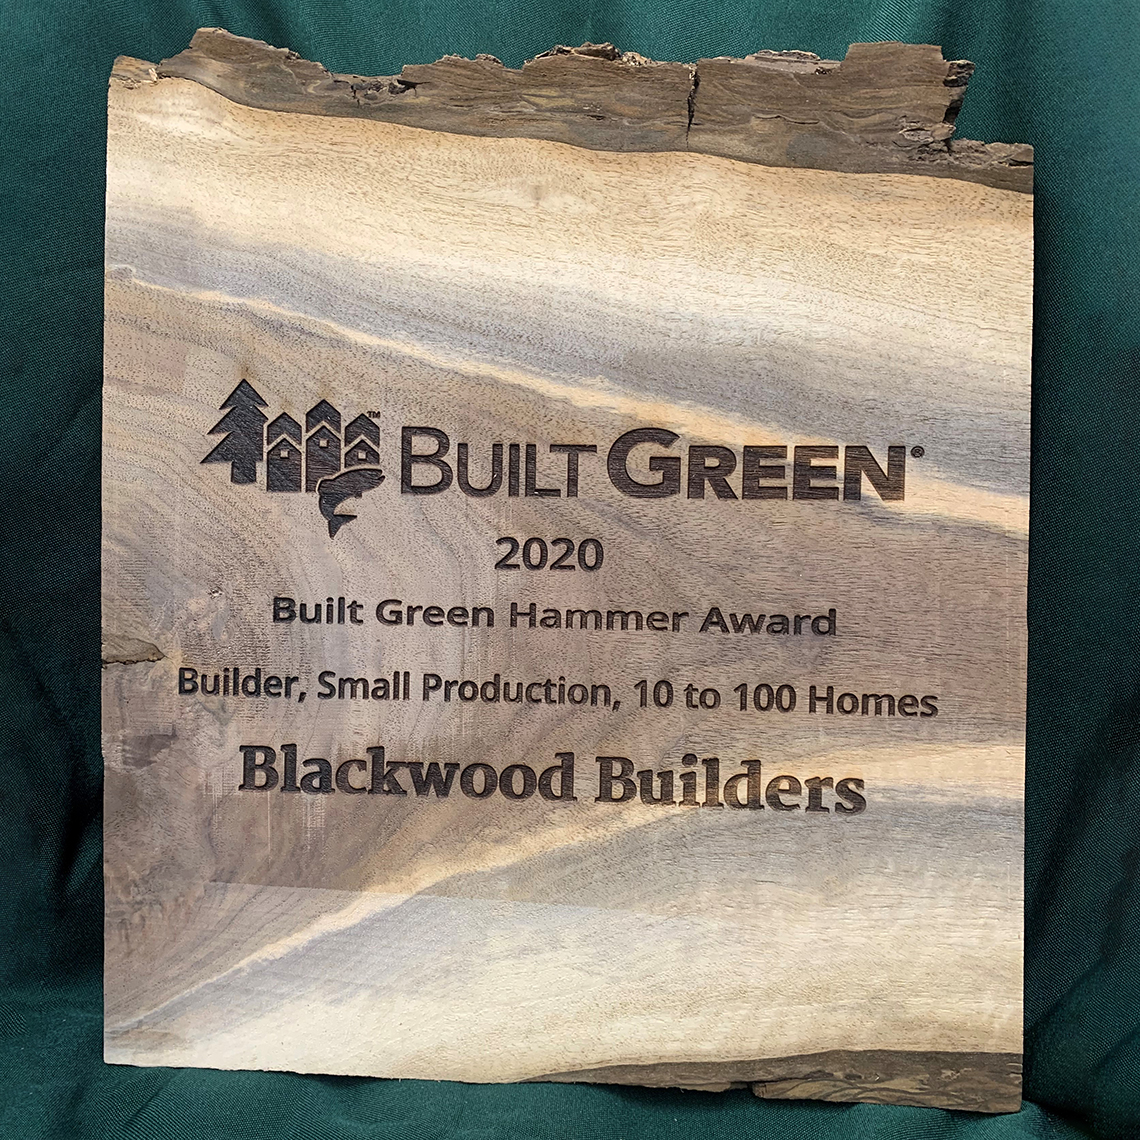 Blackwood Builders 2020 Built Green Hammer Award plaque